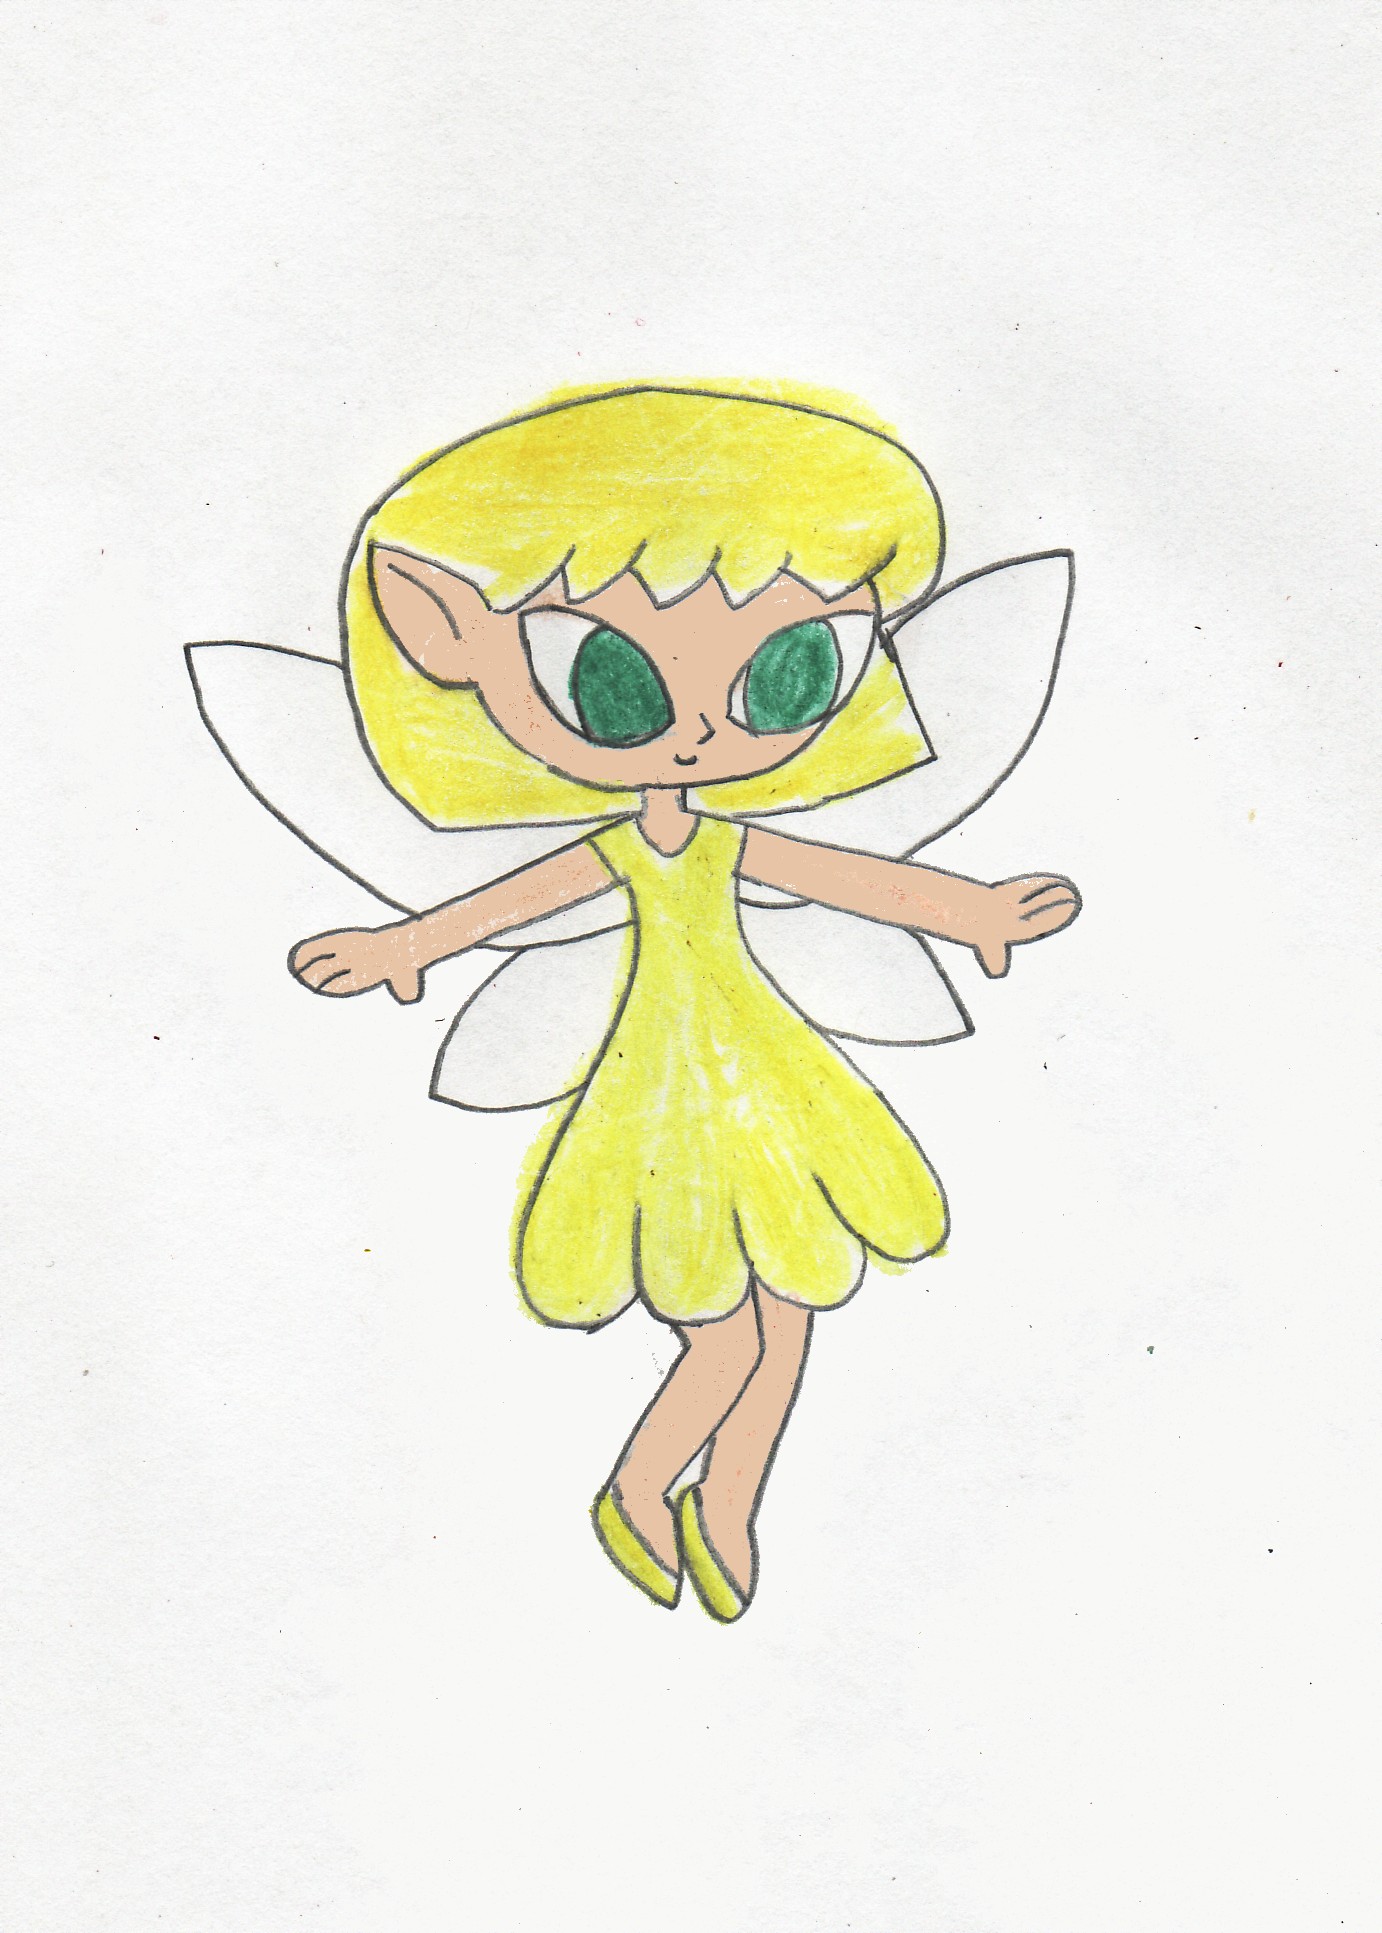 Yilla the yellow fairy by Dragonus-Prime on DeviantArt